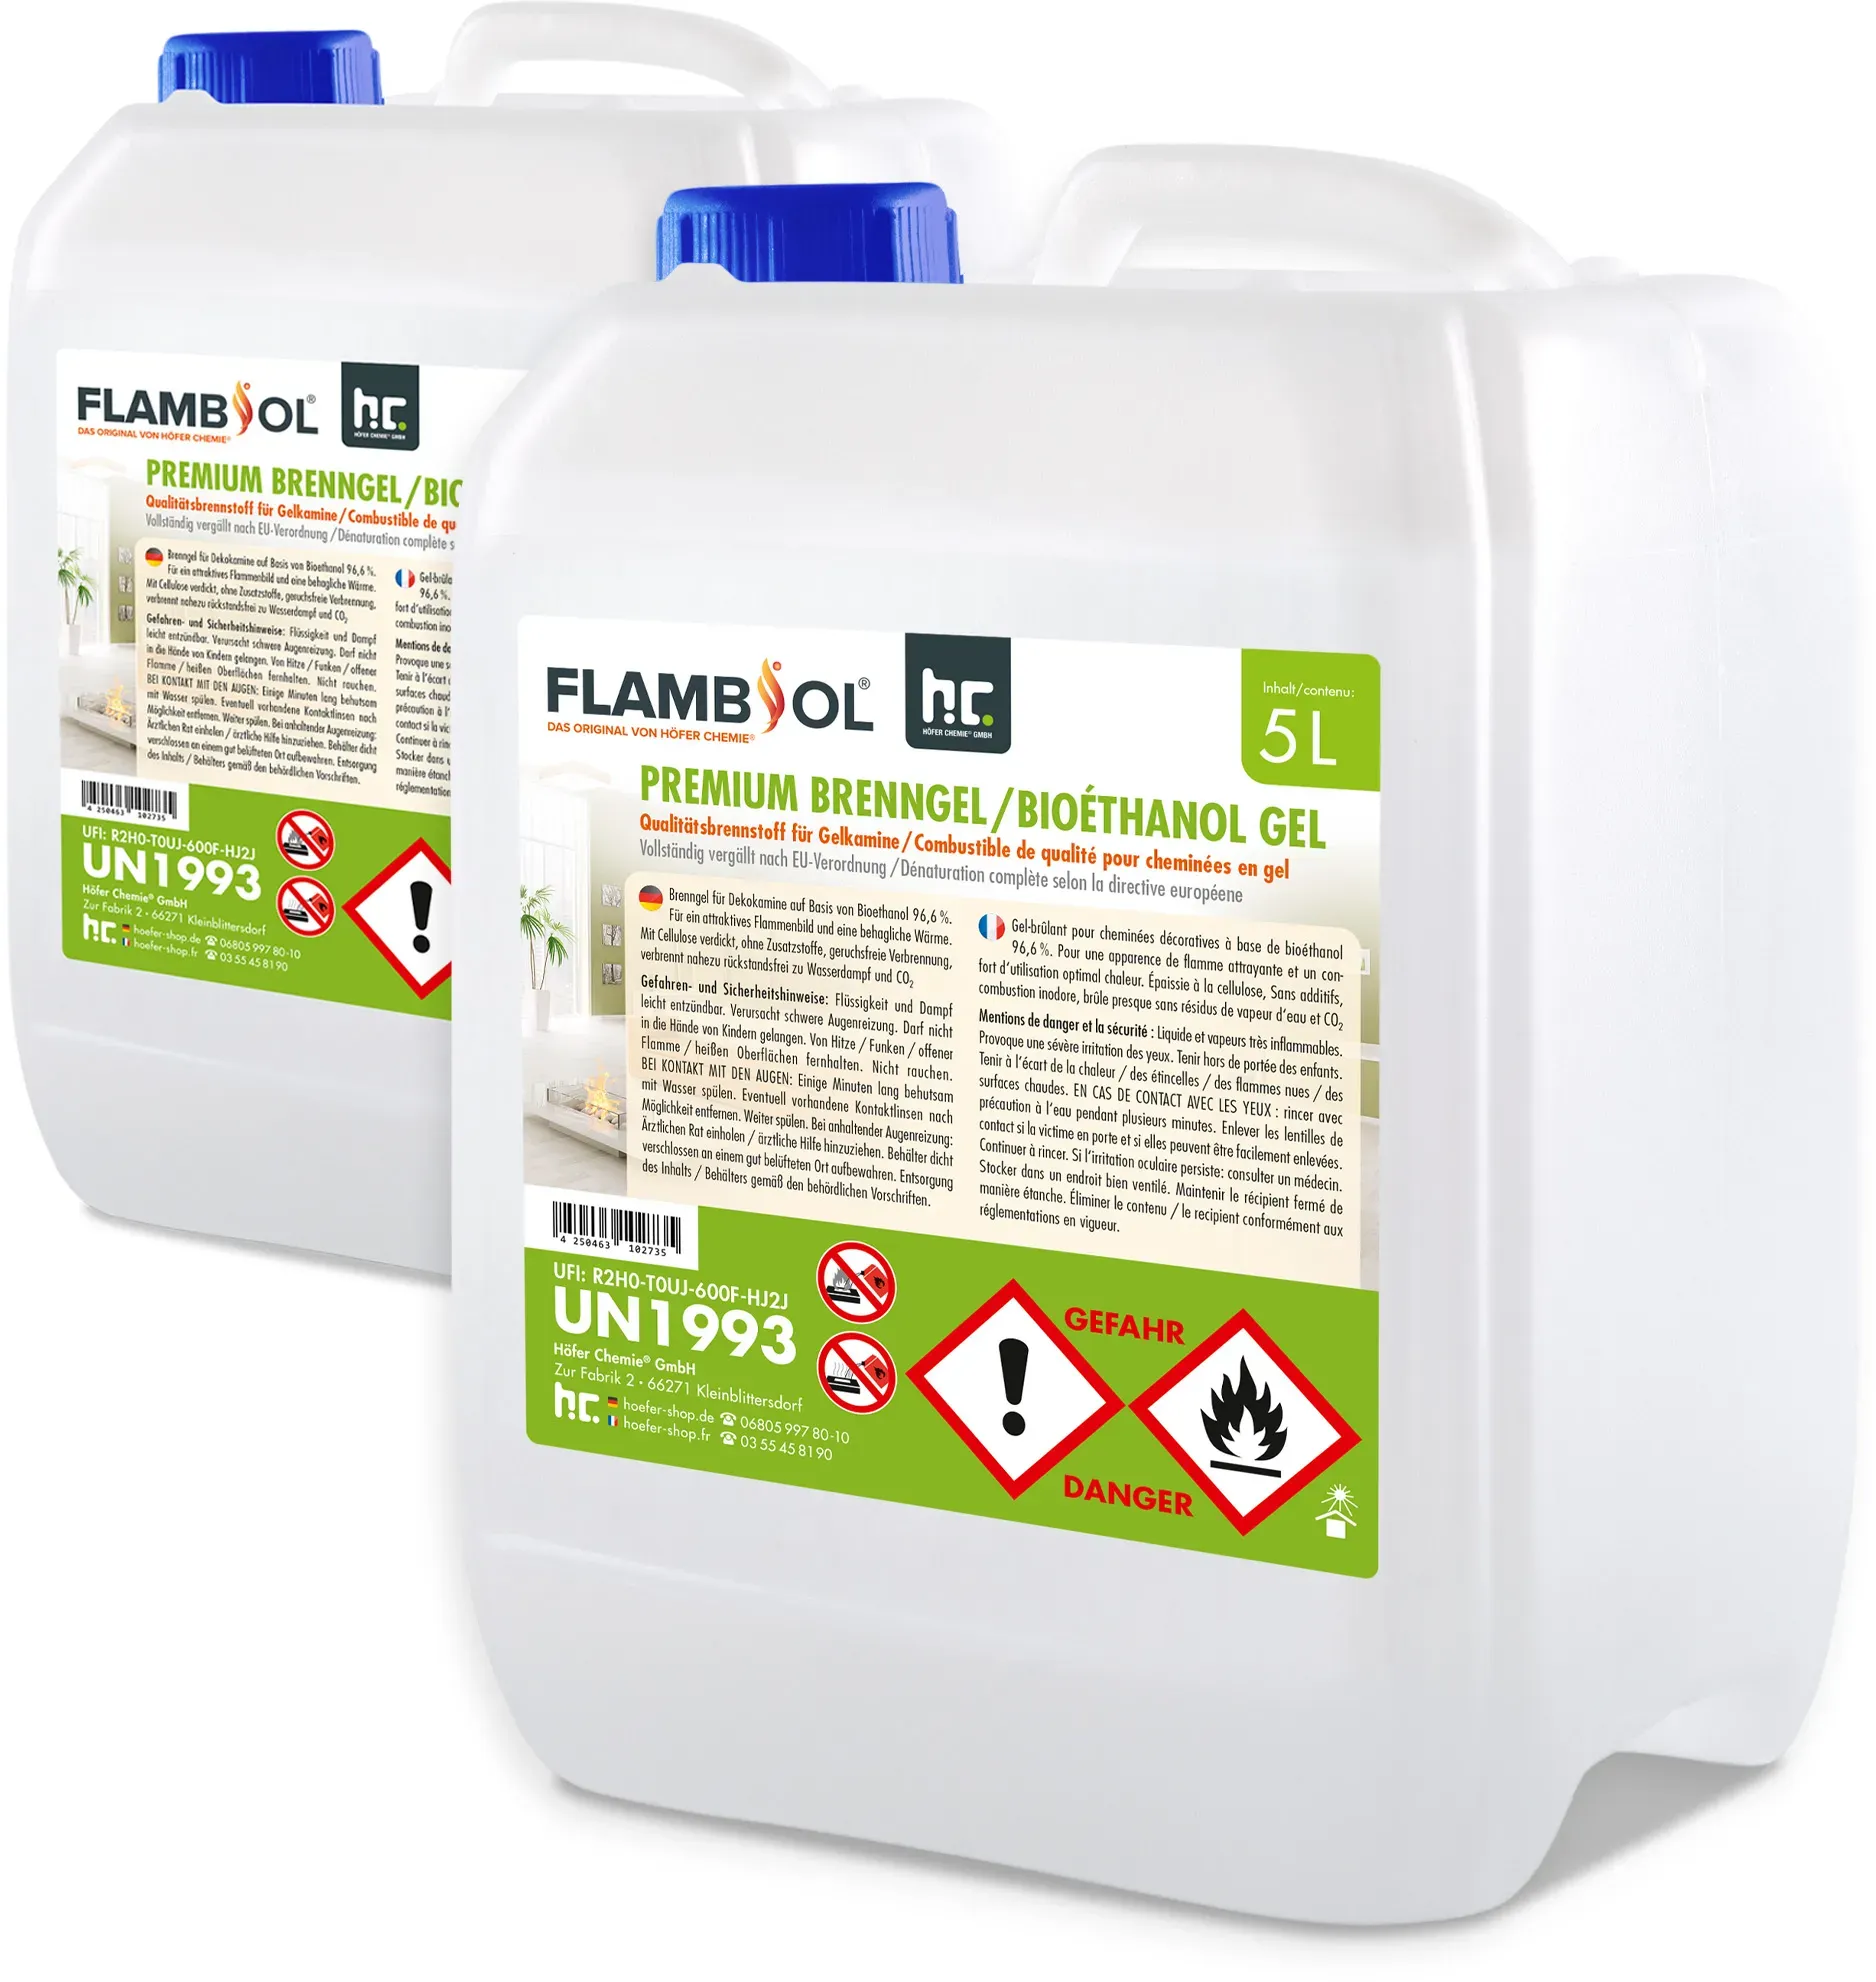 2 x 5L FLAMBIOL® Premium Bioéthanol Gel